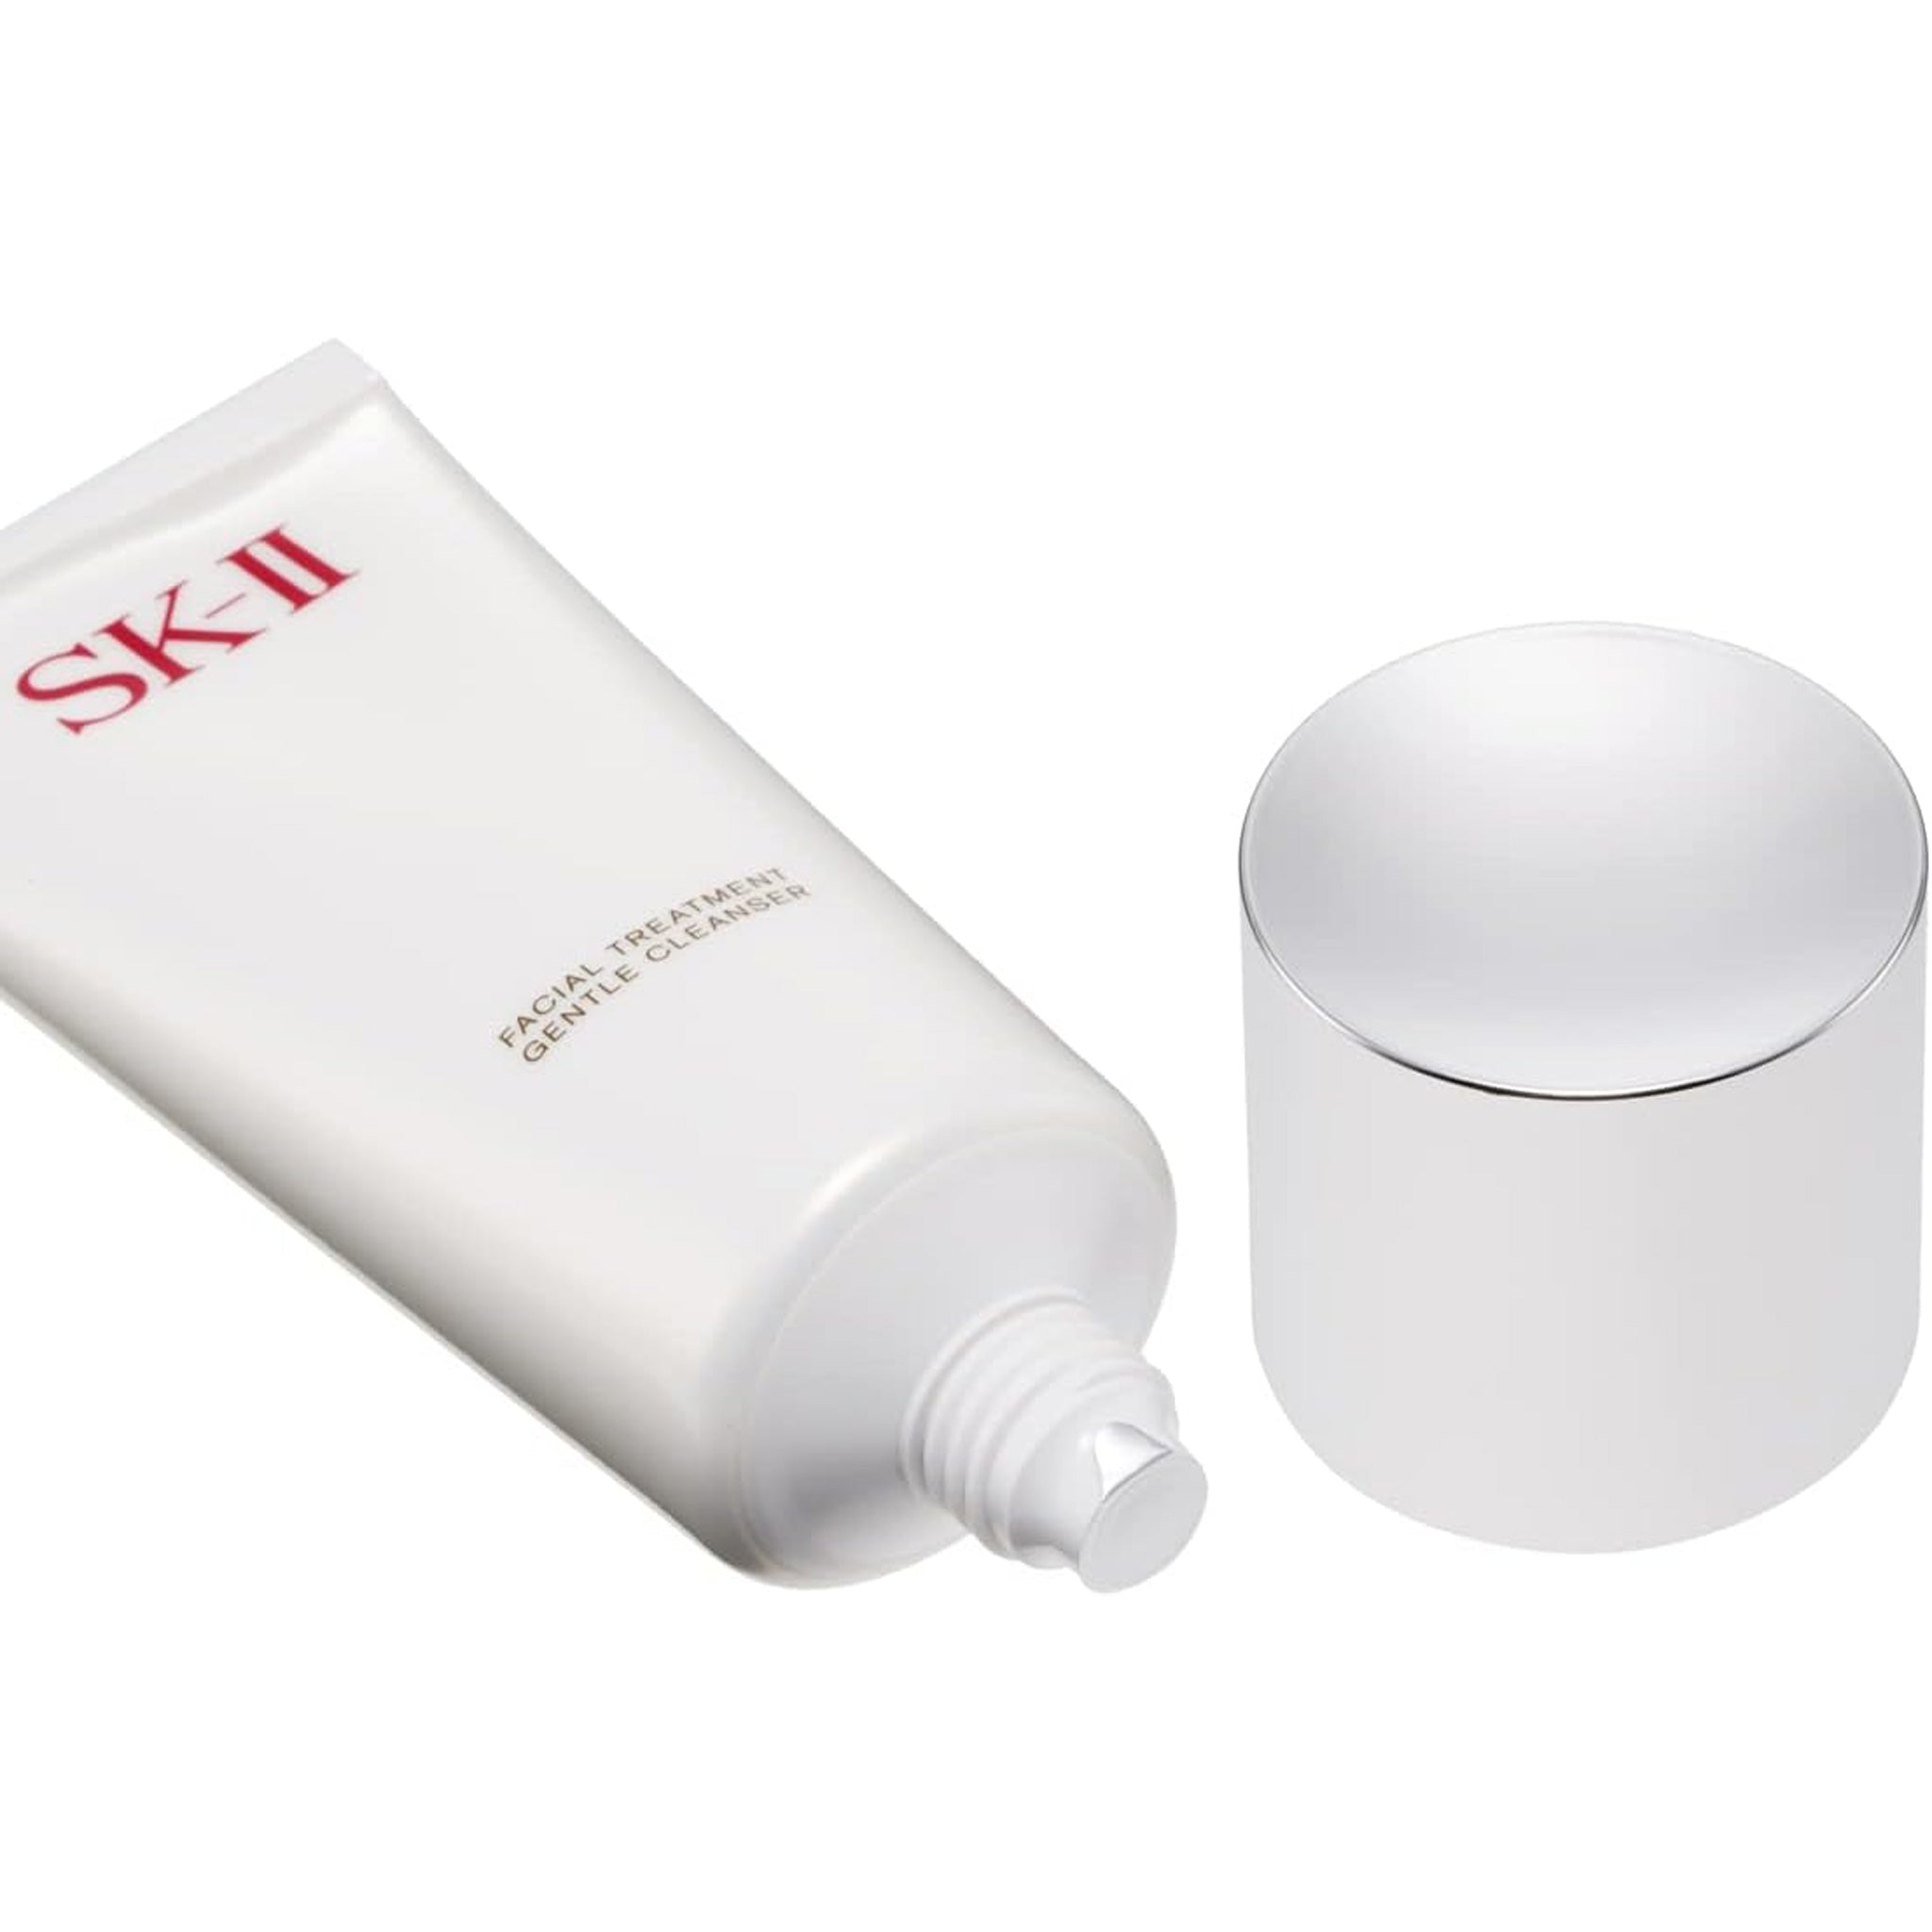 SK-II 净肌护肤洁面乳 120g